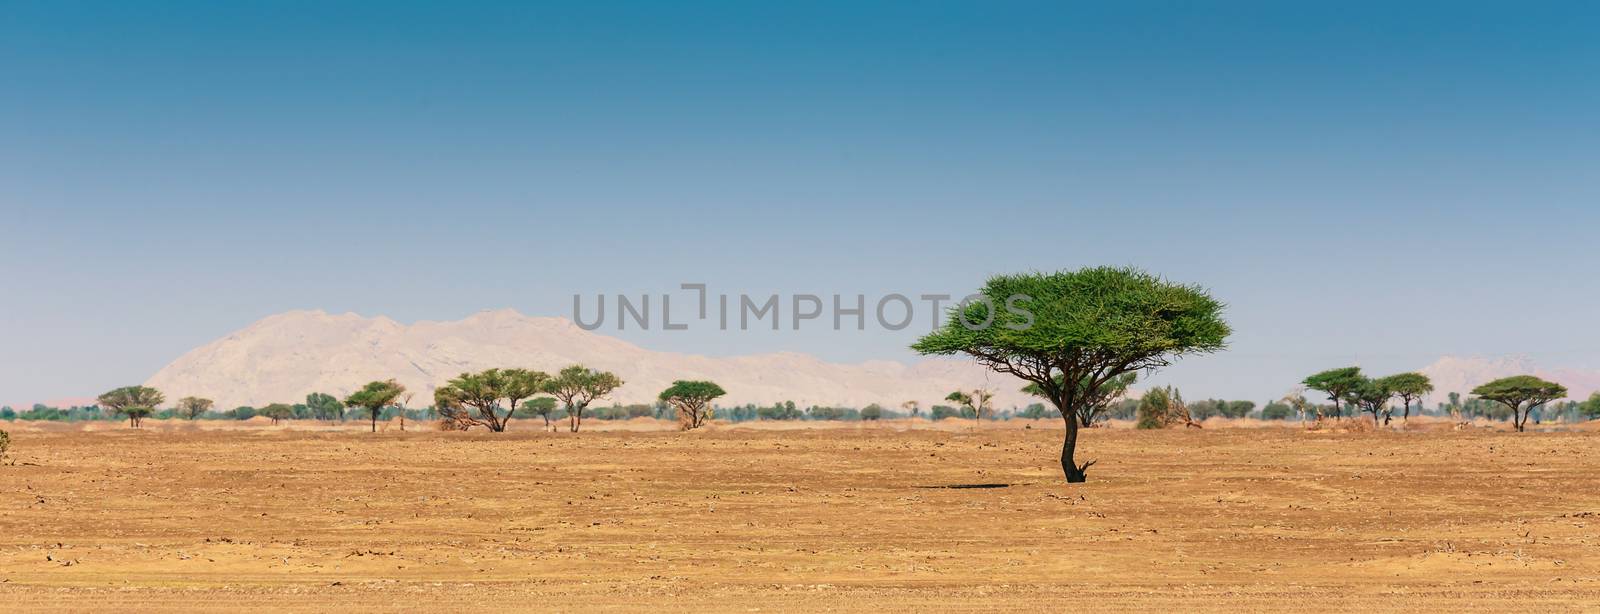 The Arabian desert on a hot sunny day